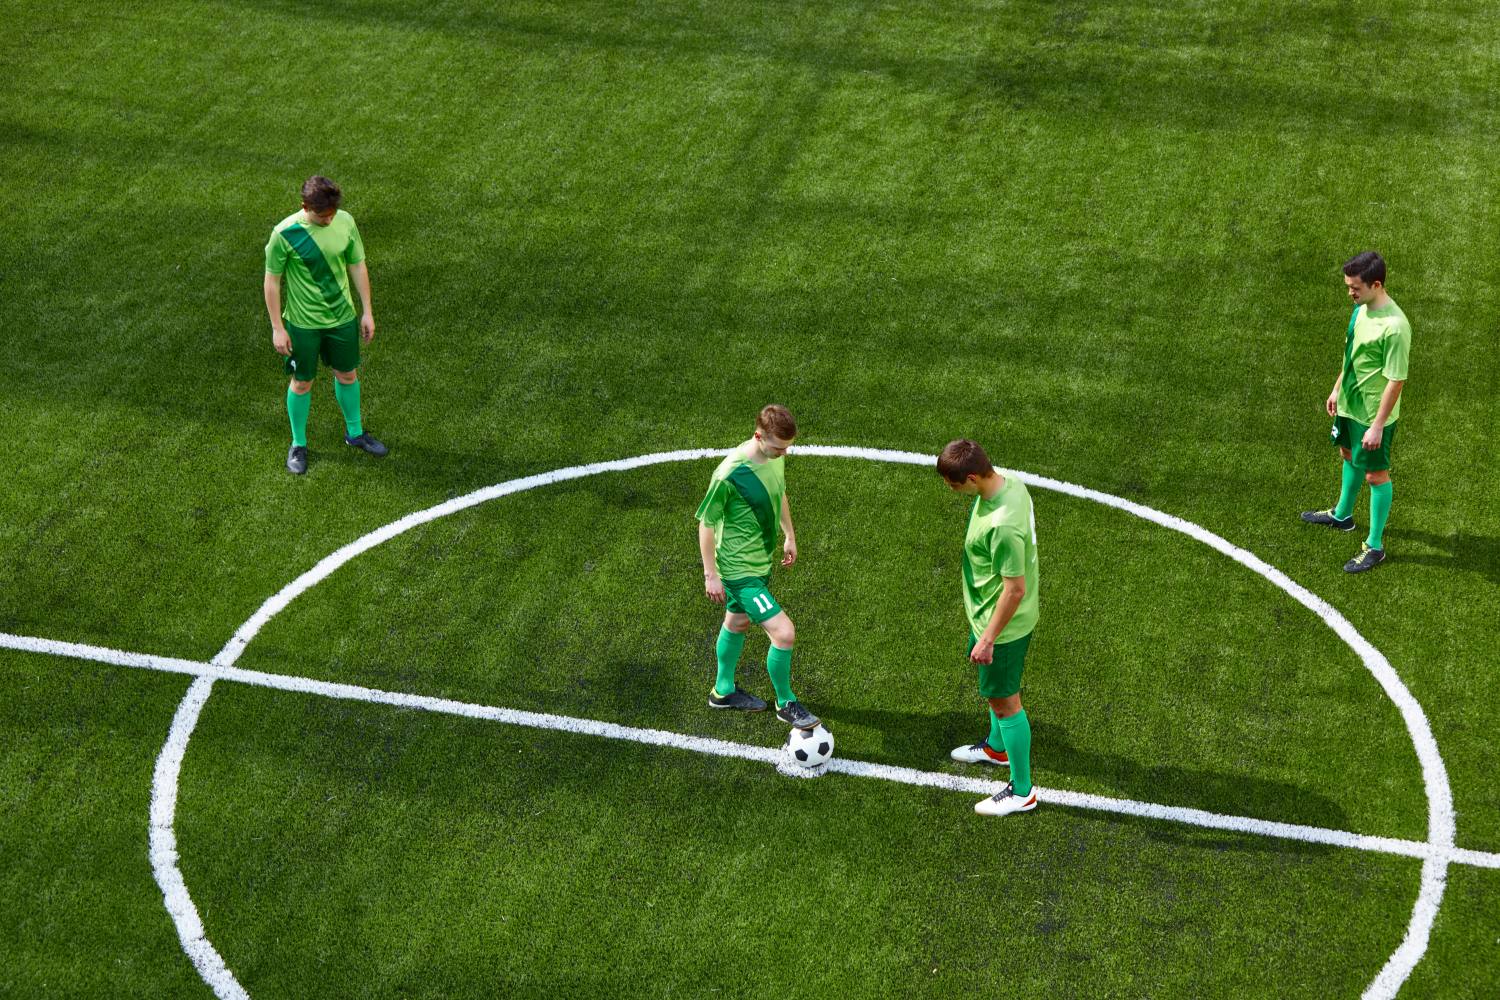 Thq legs of soccer football player training football on green grass field